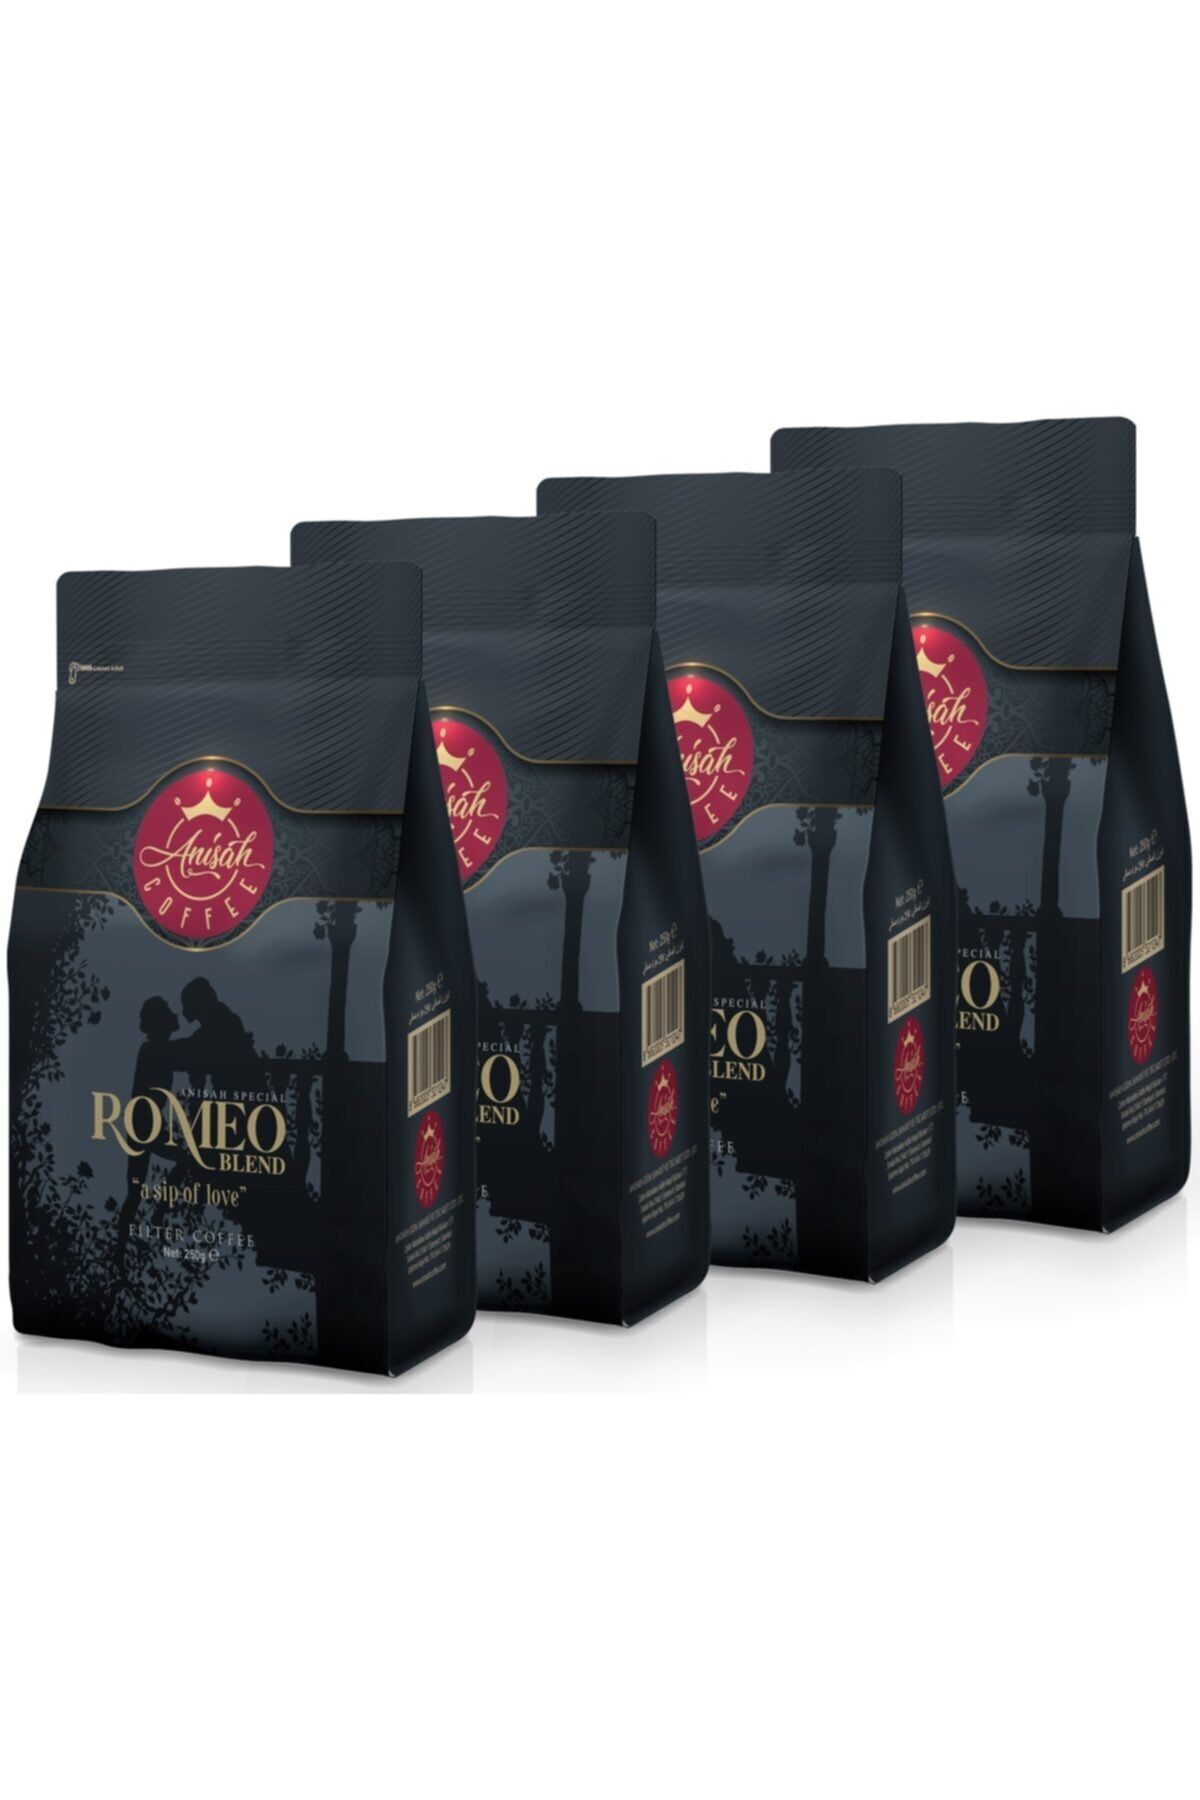 Anisah Coffee Romeo Blend Öğütülmüş Filtre Kahve 4x250 gram